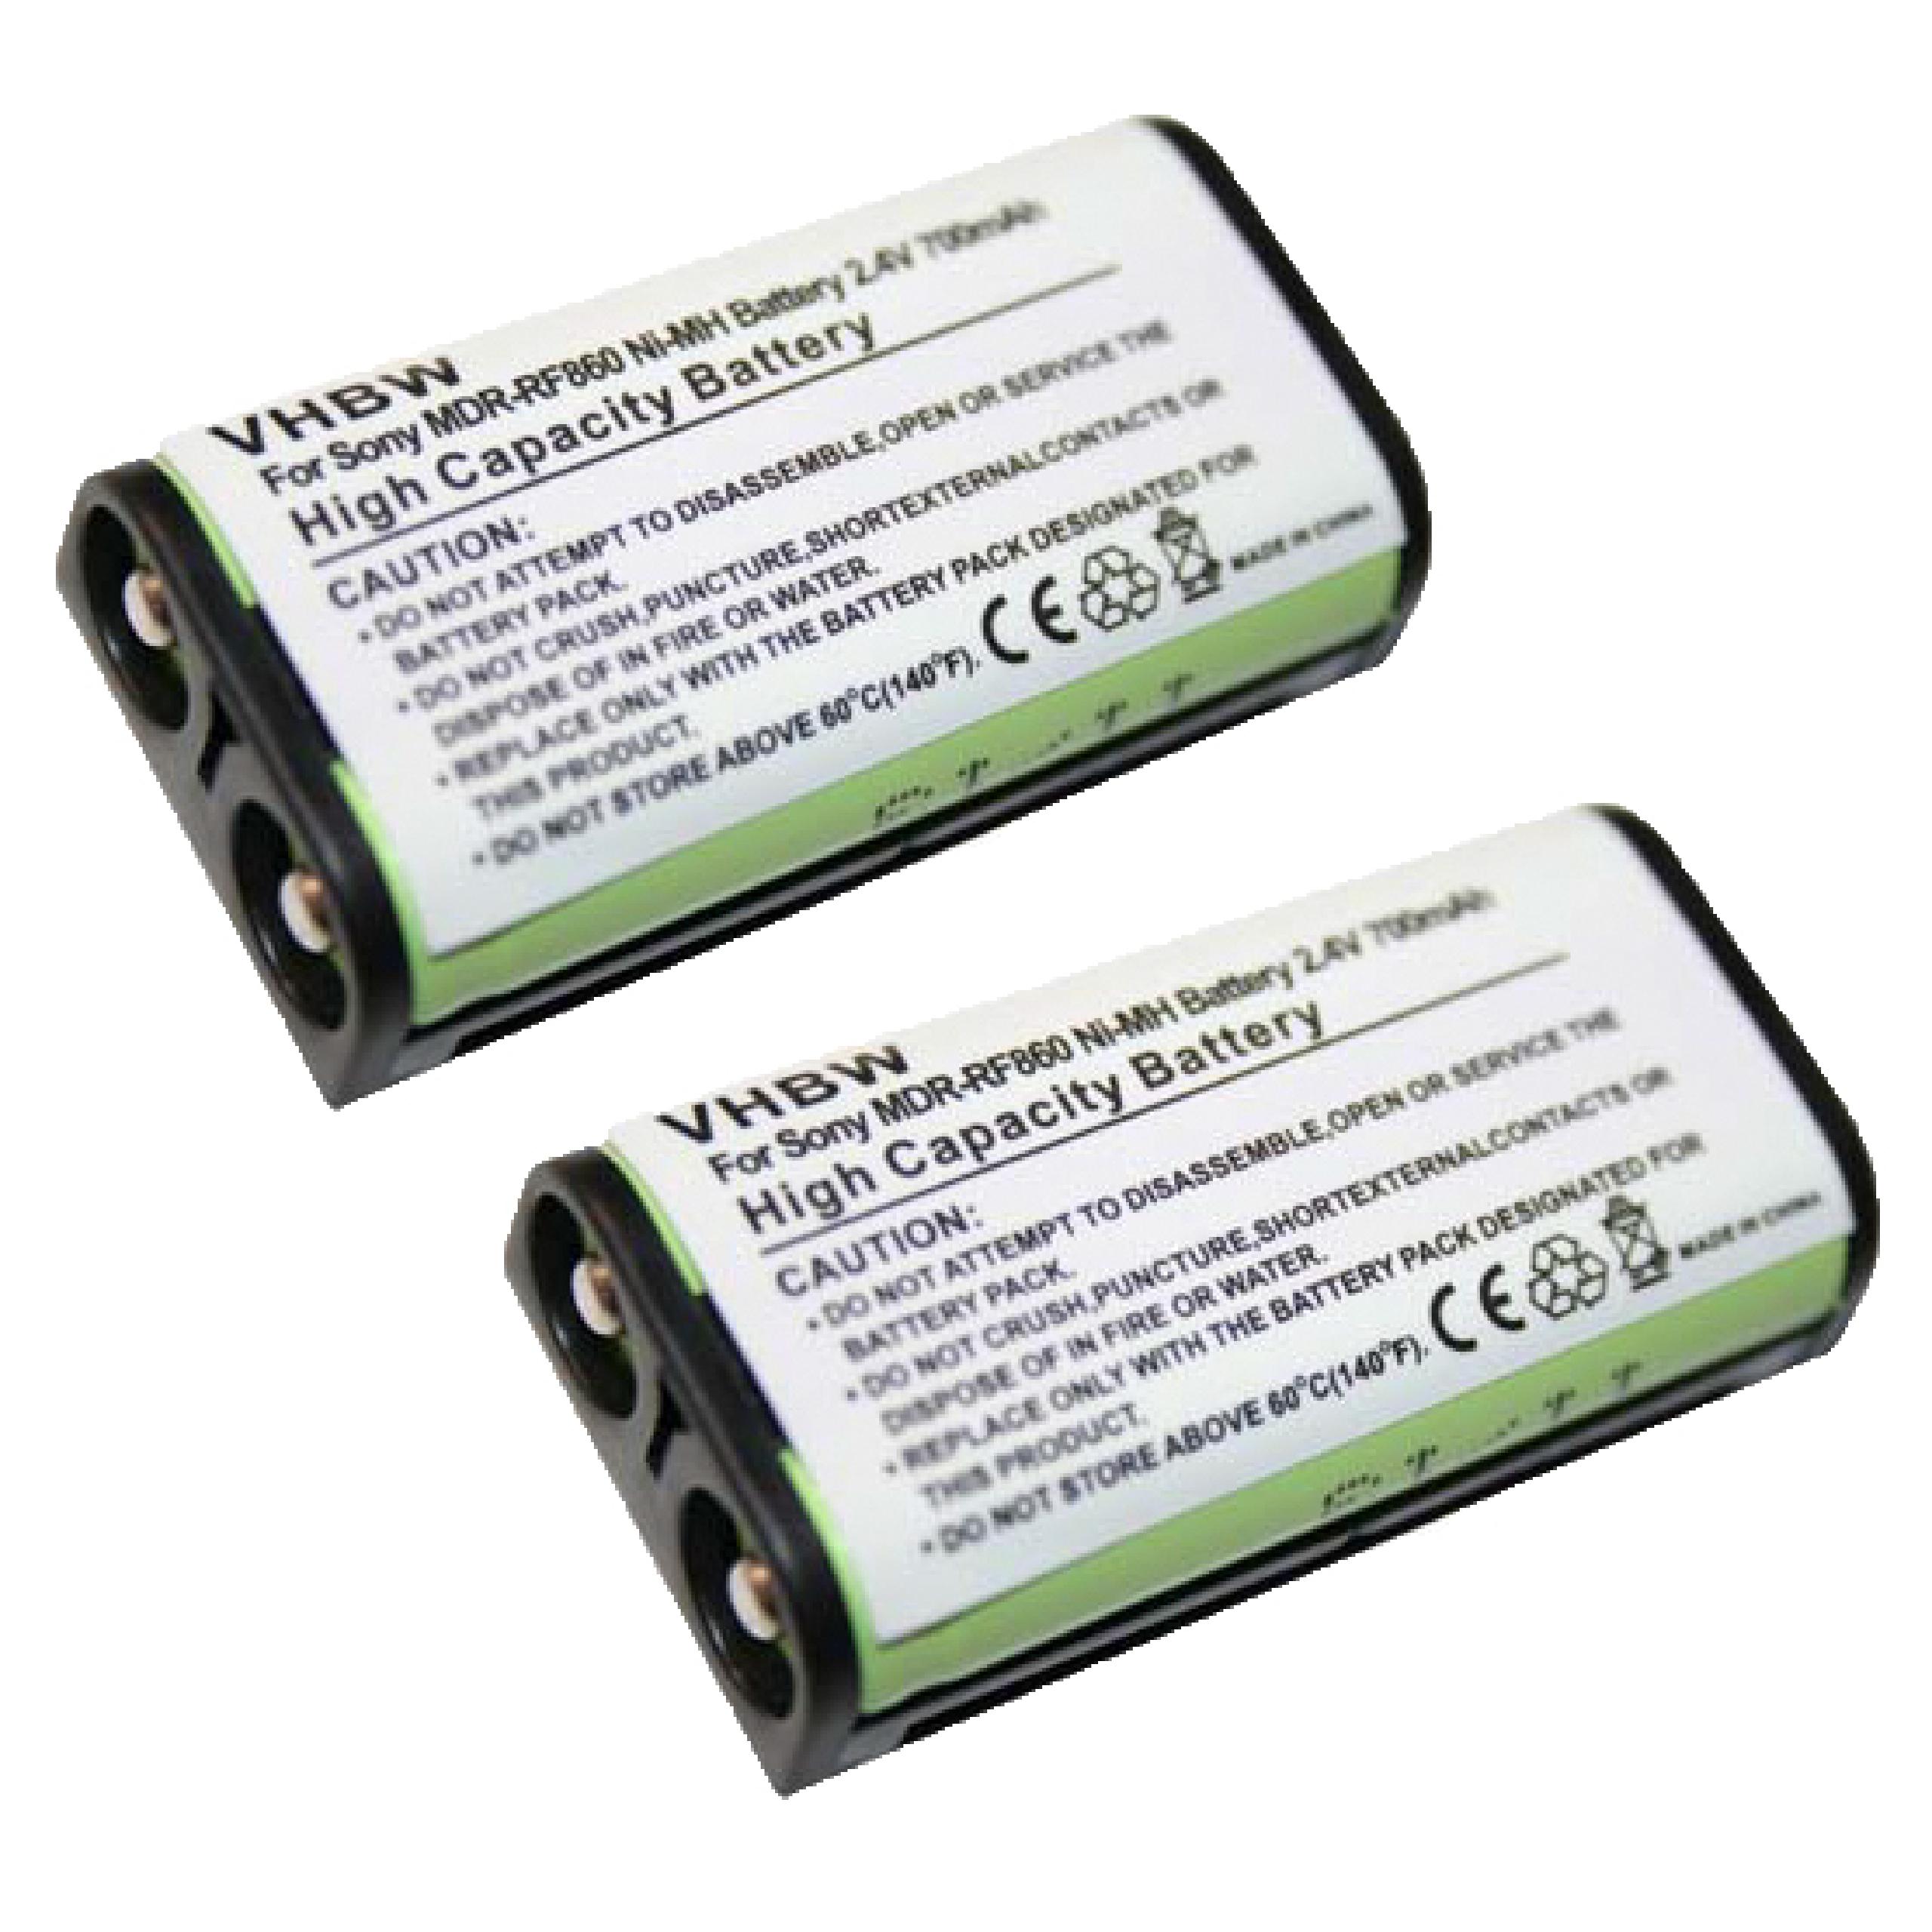 Batteria (2x pezzo) per auricolari cuffie wireless sostituisce Sony BP-HP550-11 Sony - 700mAh 2,4V NiMH